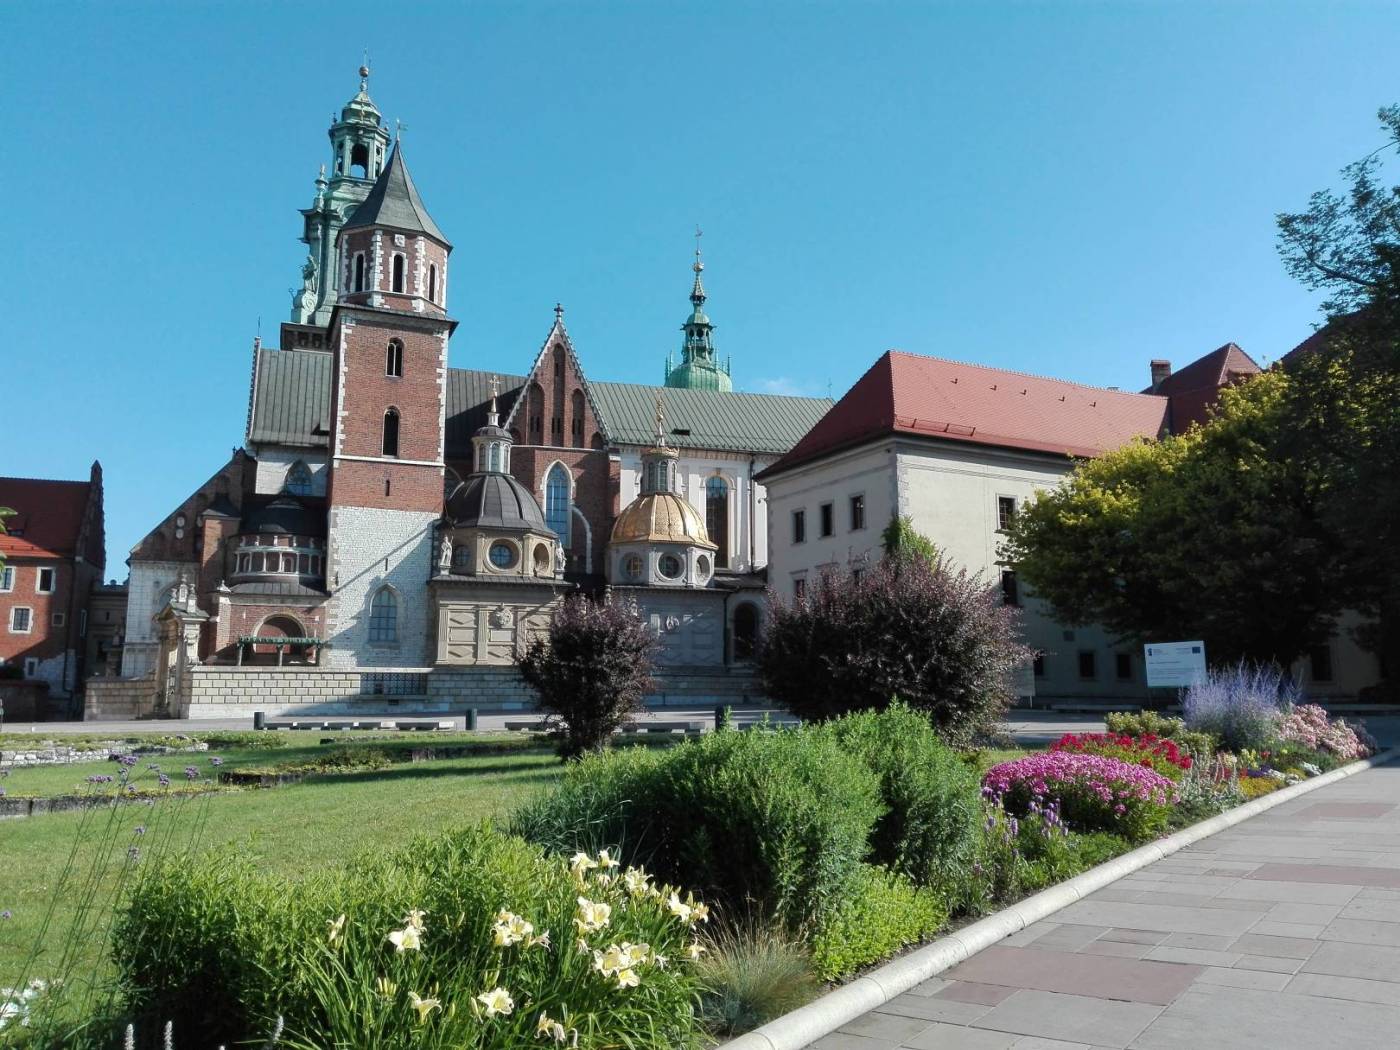 Catherdral Wawel (Katedra Wawelska), Cracow